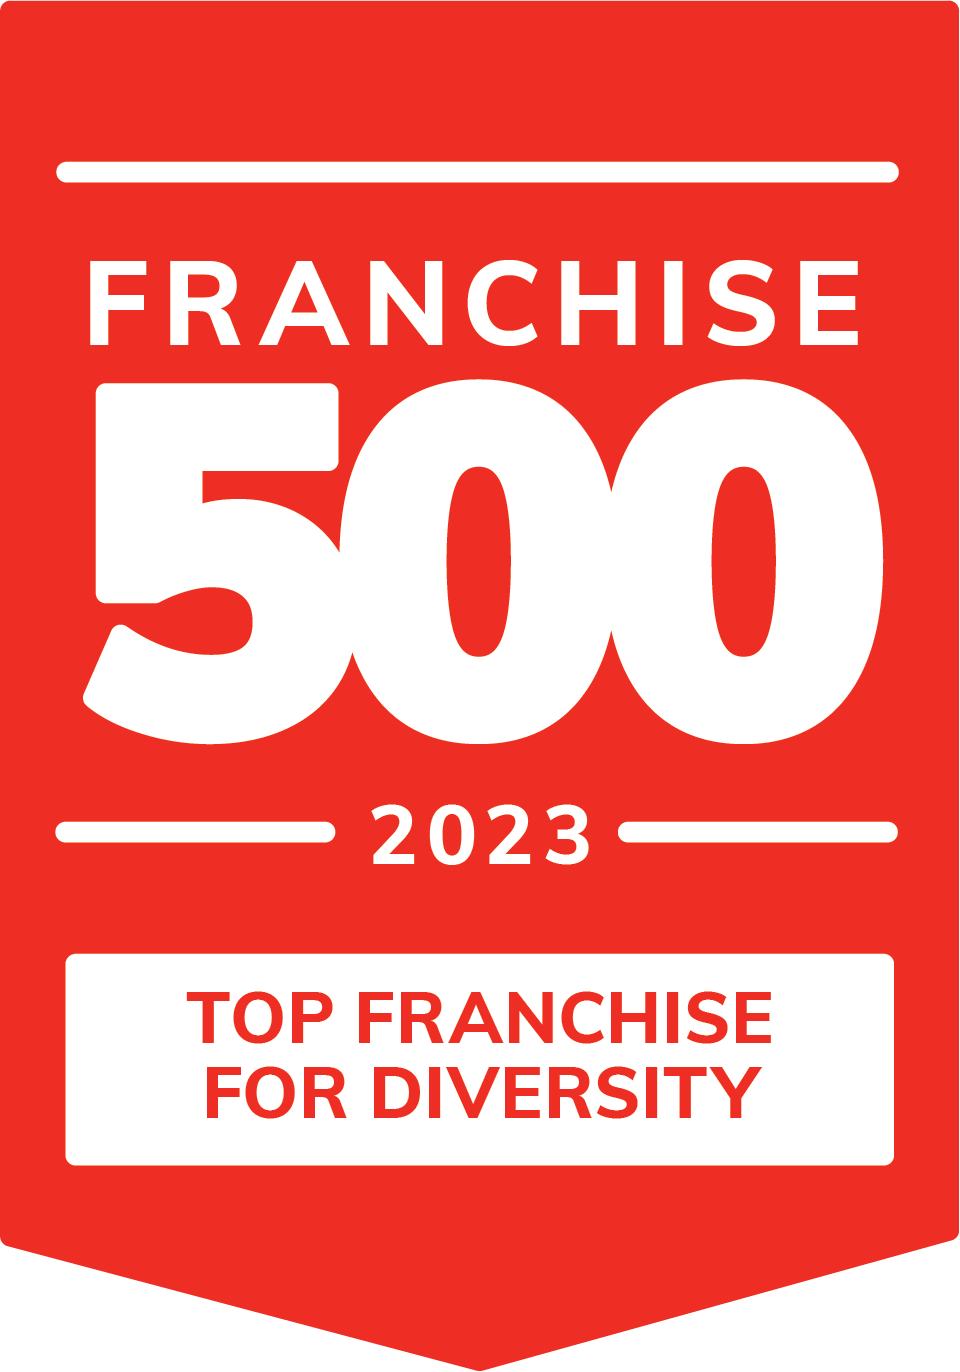 Top Franchise for Diversity